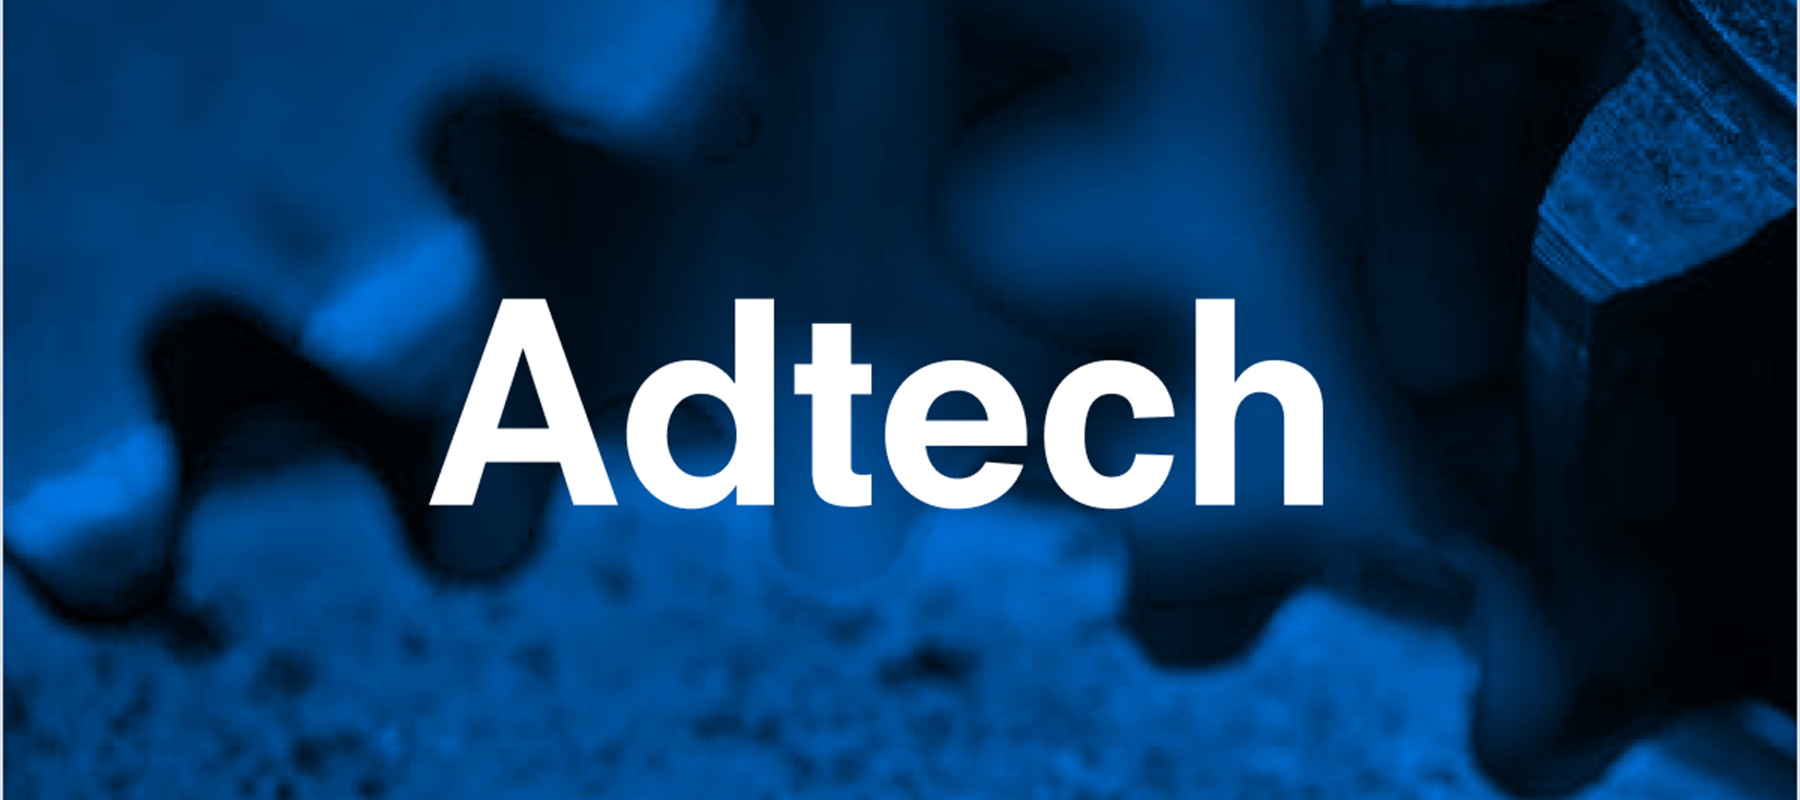 Global adtech market to reach $42.5 billion by 2029, report